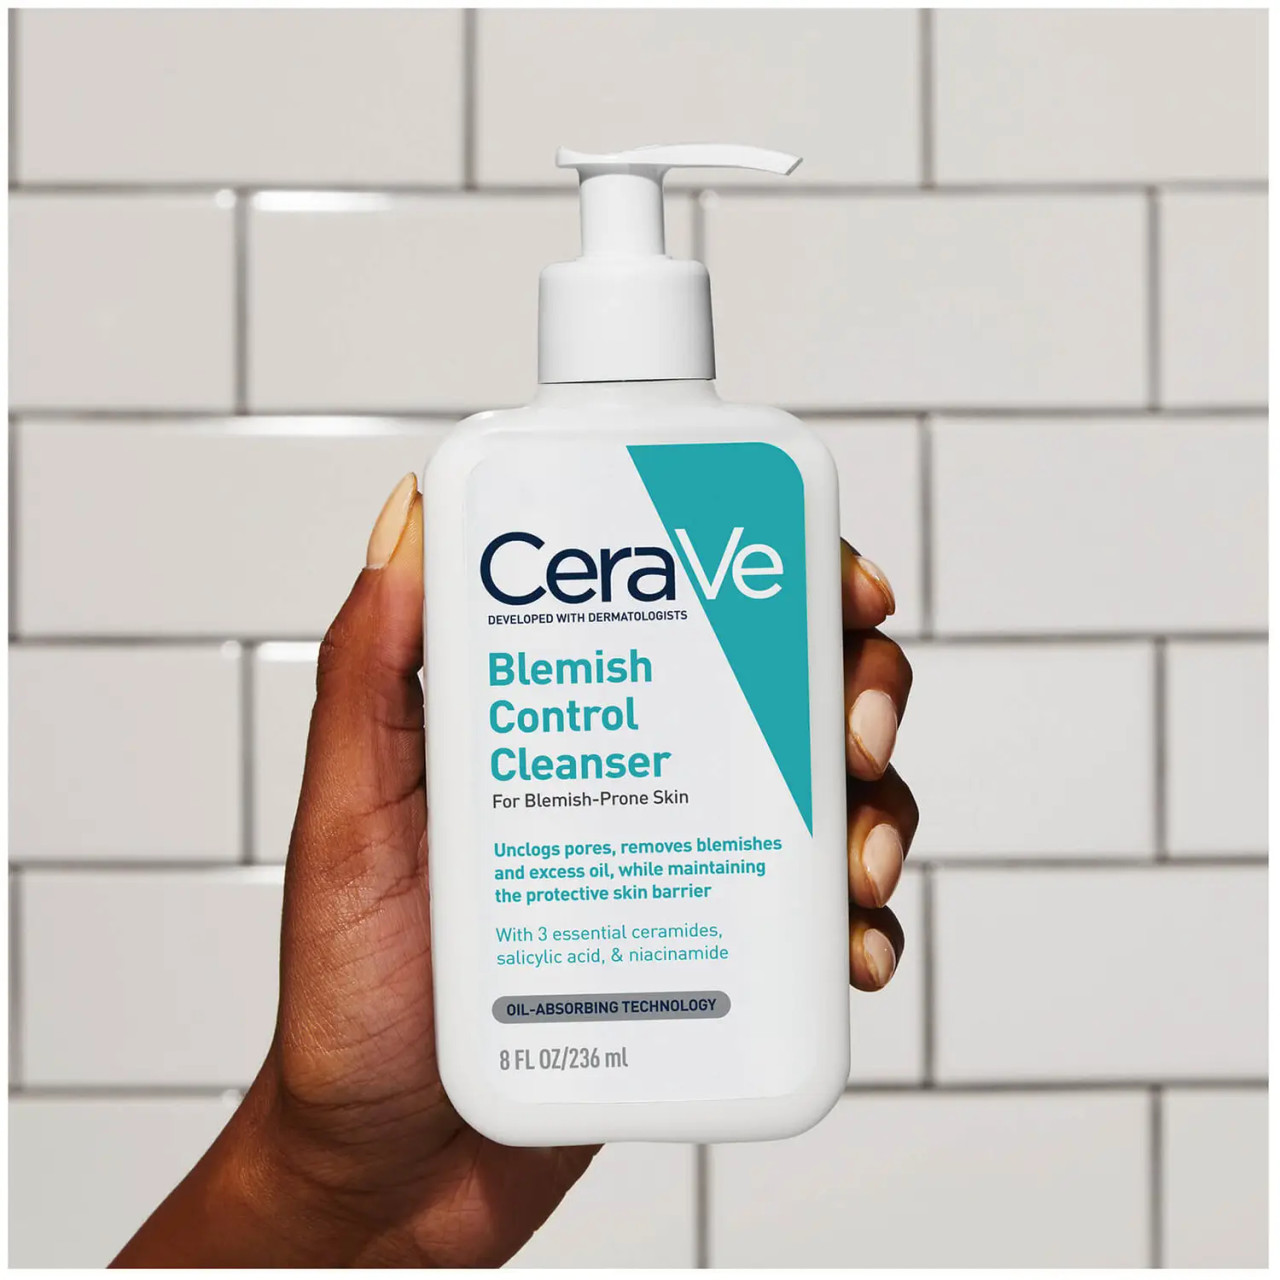 Cerave Acne Control Gel 2% Salicylic Acid Acne Treatment 40Ml - Beauty &  Grooming